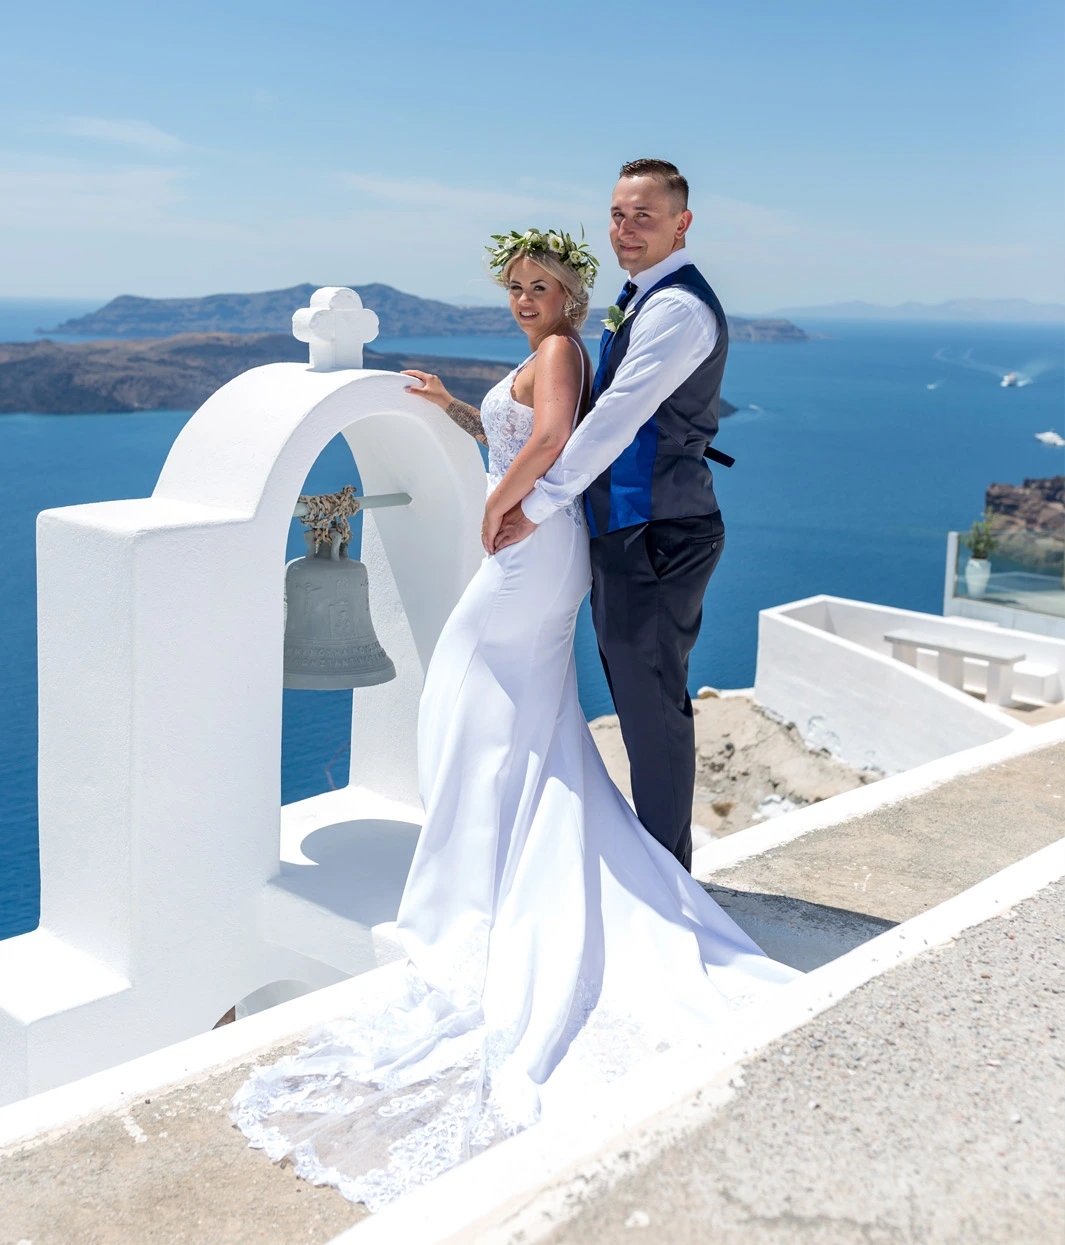 Santorini Weddings - Santorini Wedding Planners - Luxury Weddings in Santorini - Weddings in Santorini Greece - Margarita Weddings Santorini Greece - Wedding Venue Santorini Greece